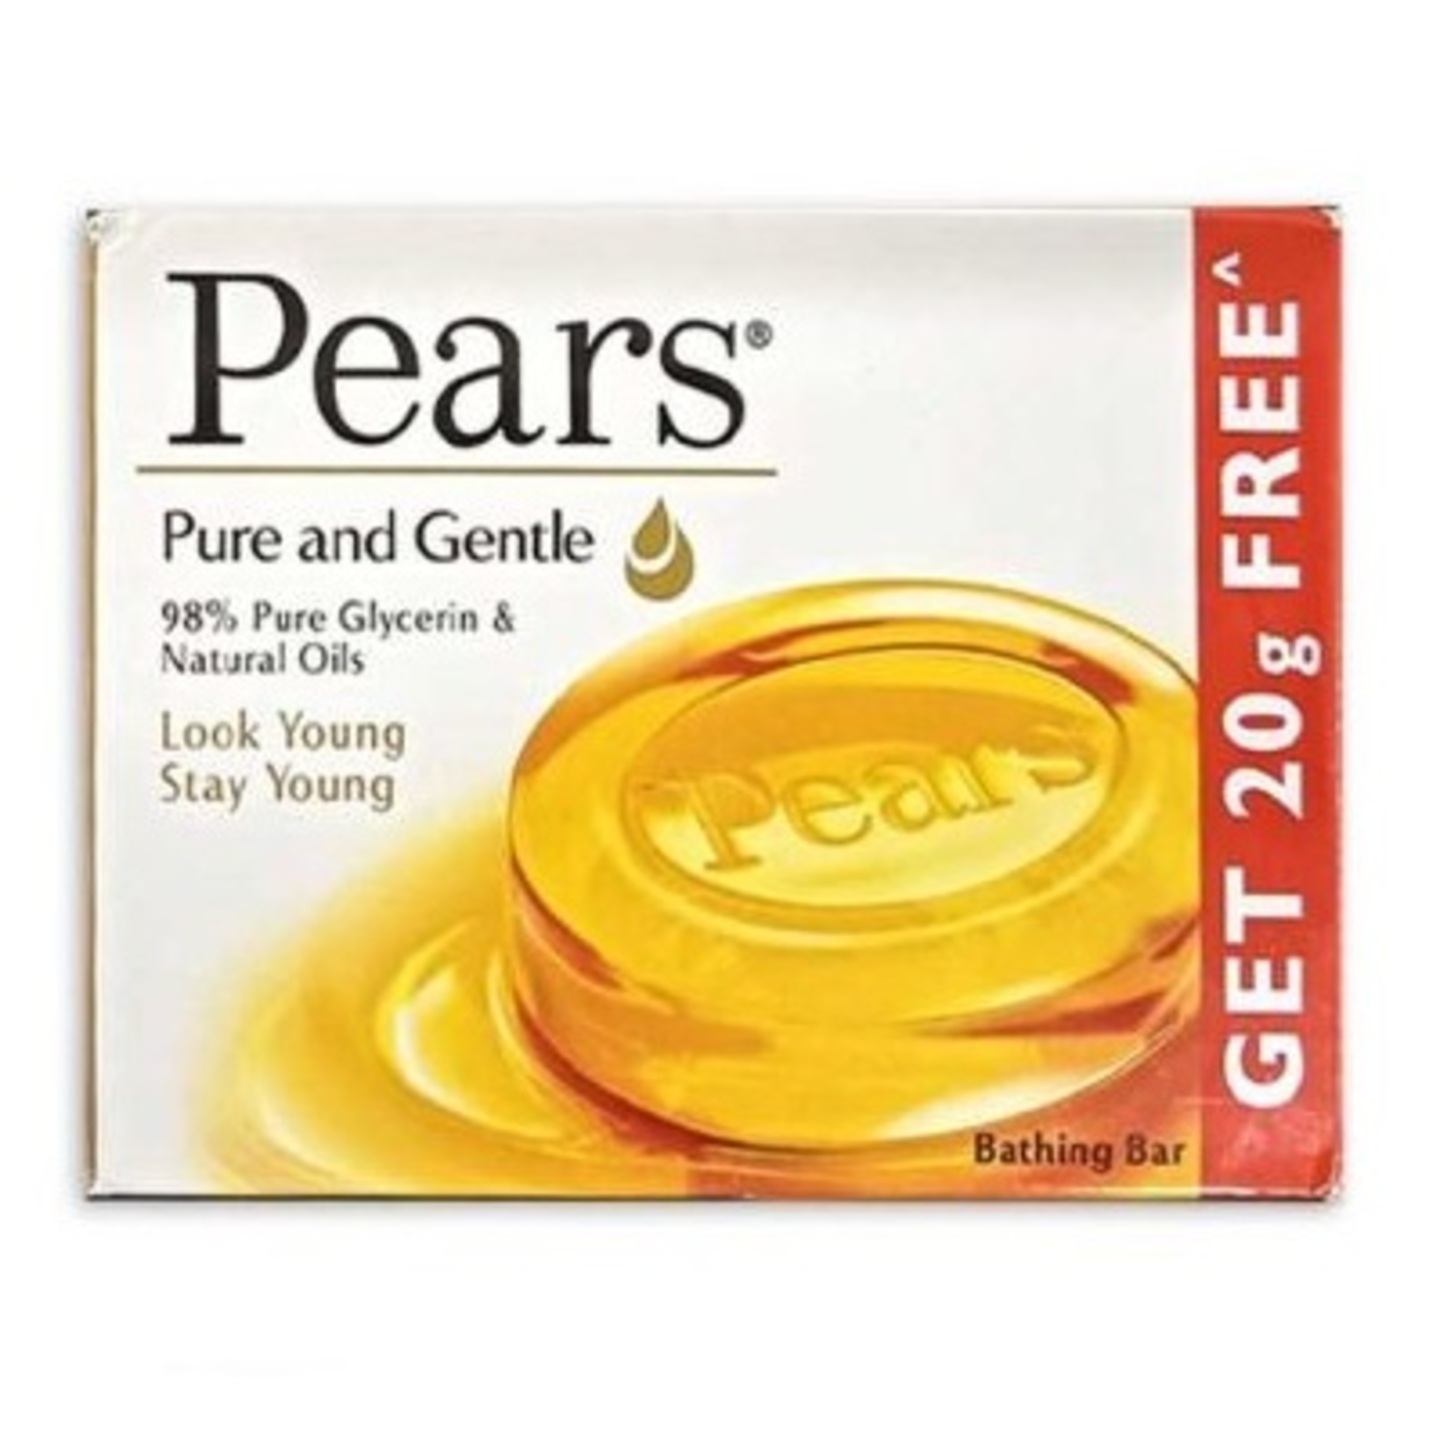 Pears Pure & Gentle Bathing Bar - 120 gram (100 gm + 20 gm free)